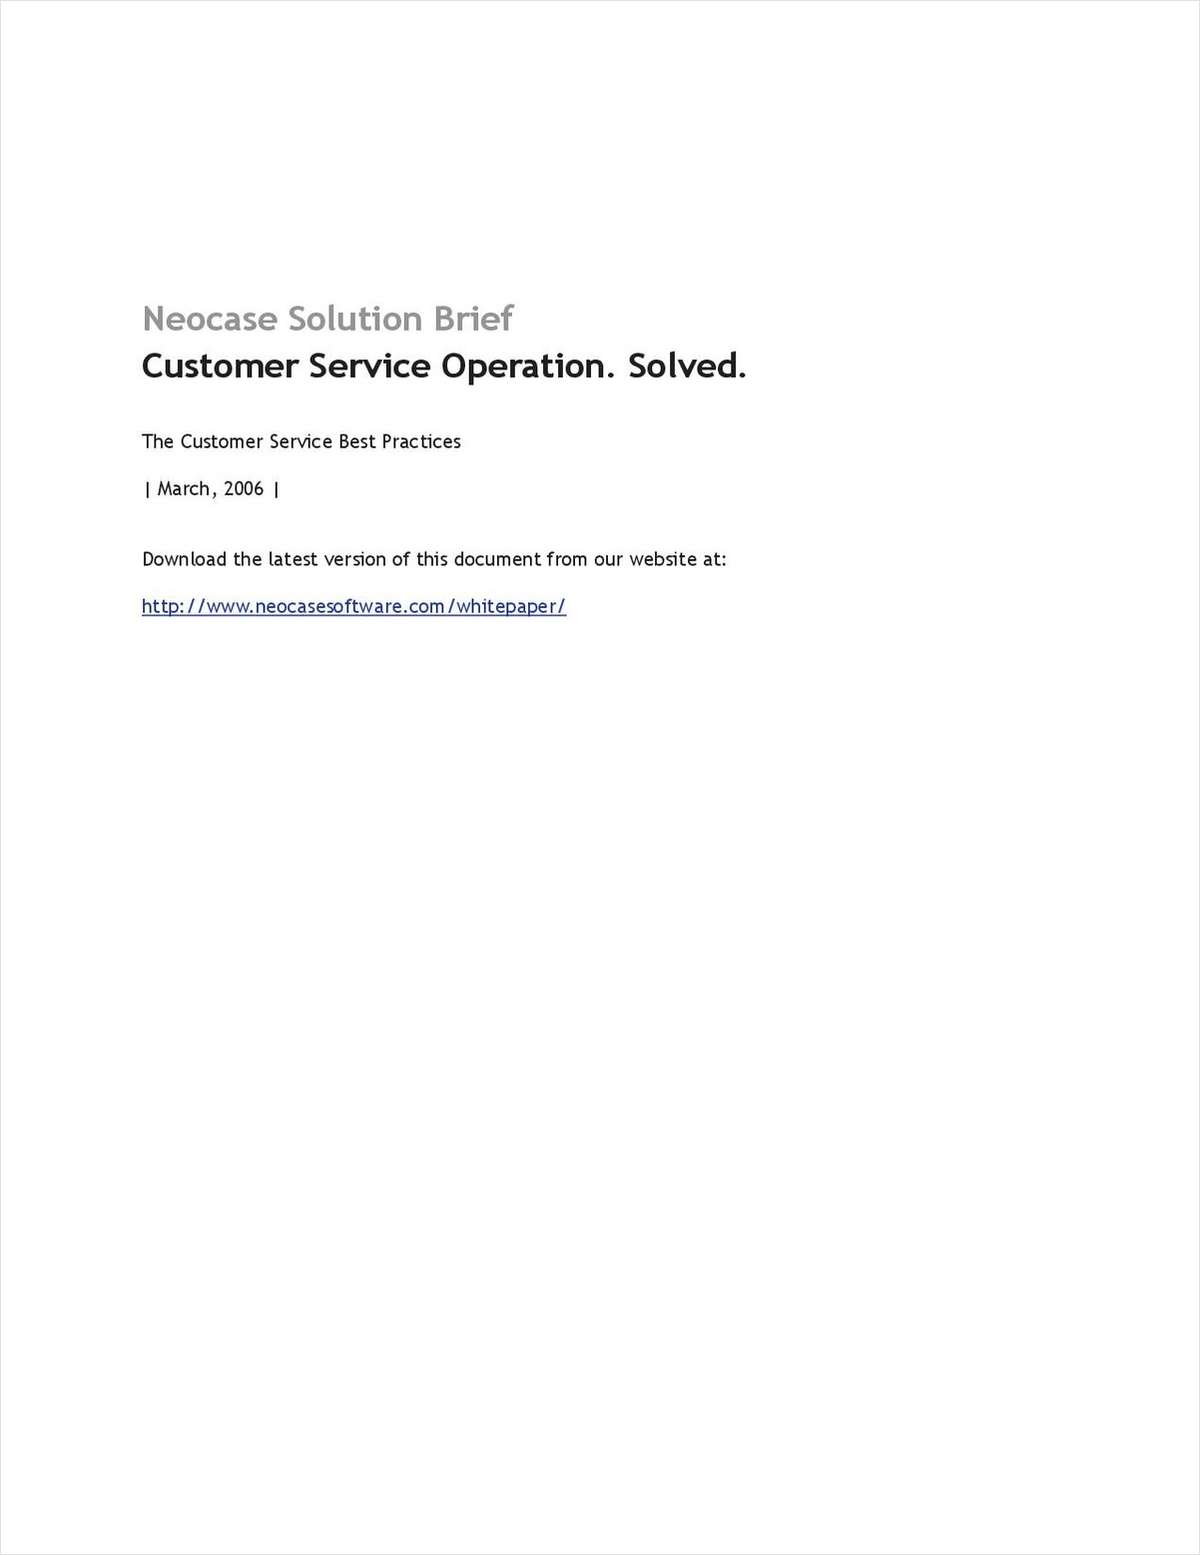 Neocase's Customer Service Best Practices